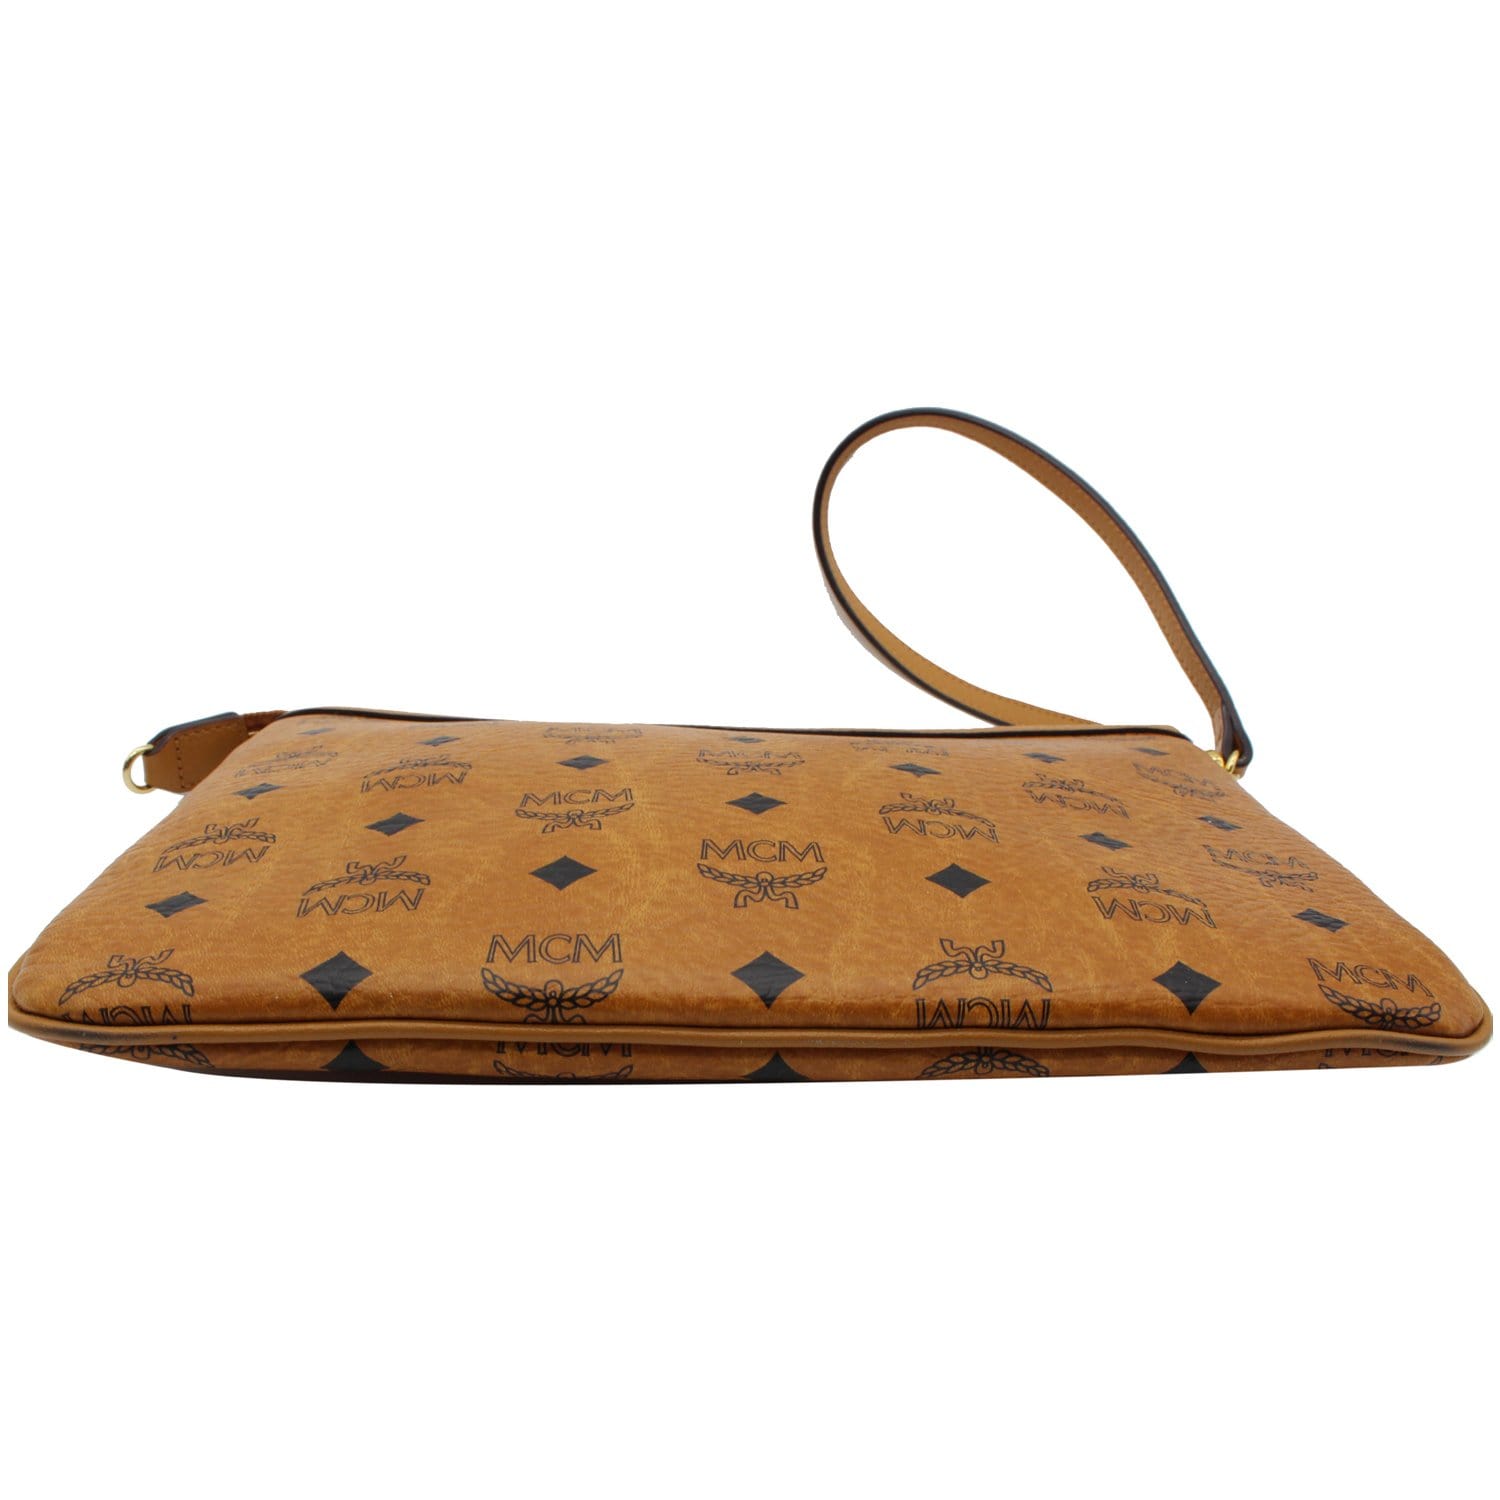 MCM Visetos Cognac Brown Multi Purpose Clutch Bag,Whislet Wallet